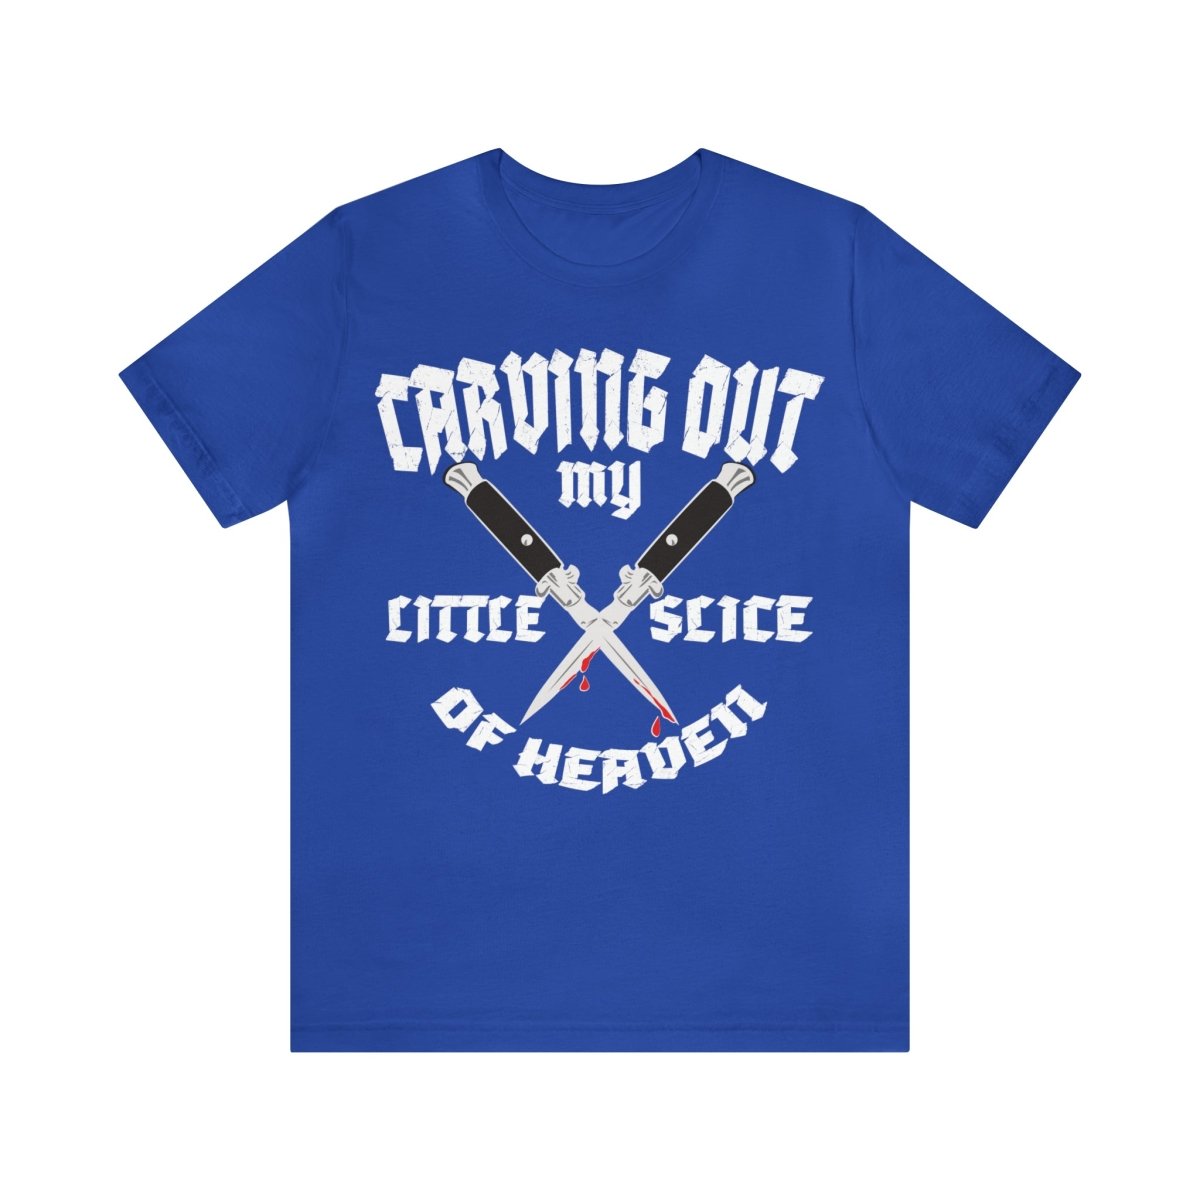 Slice of Heaven Premium T-Shirt, Halloween Shirt, Switchblade